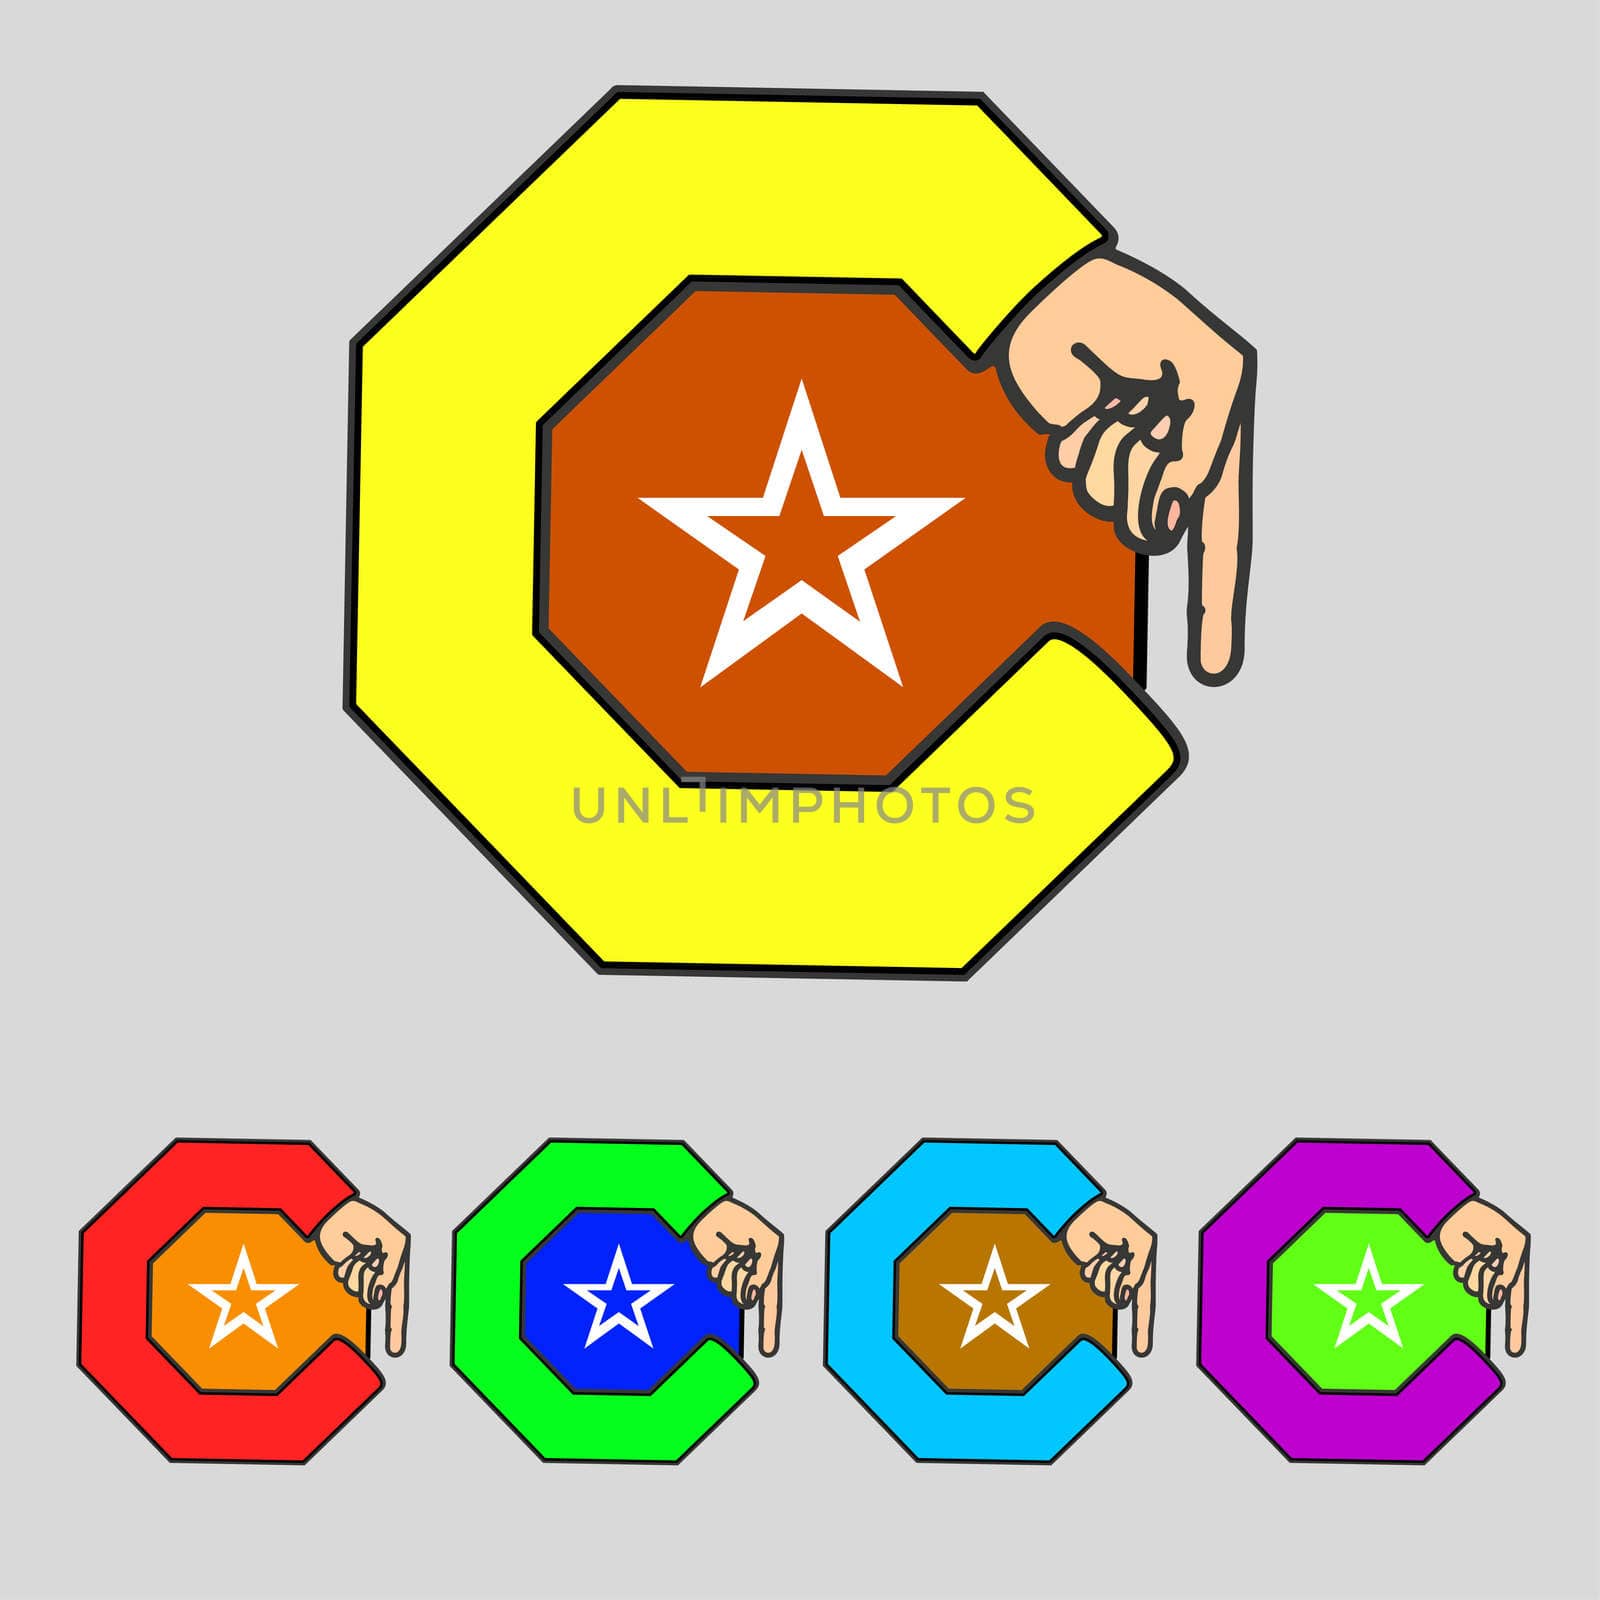 Star sign icon. Favorite button. Navigation symbol.Set colourful buttons illustration